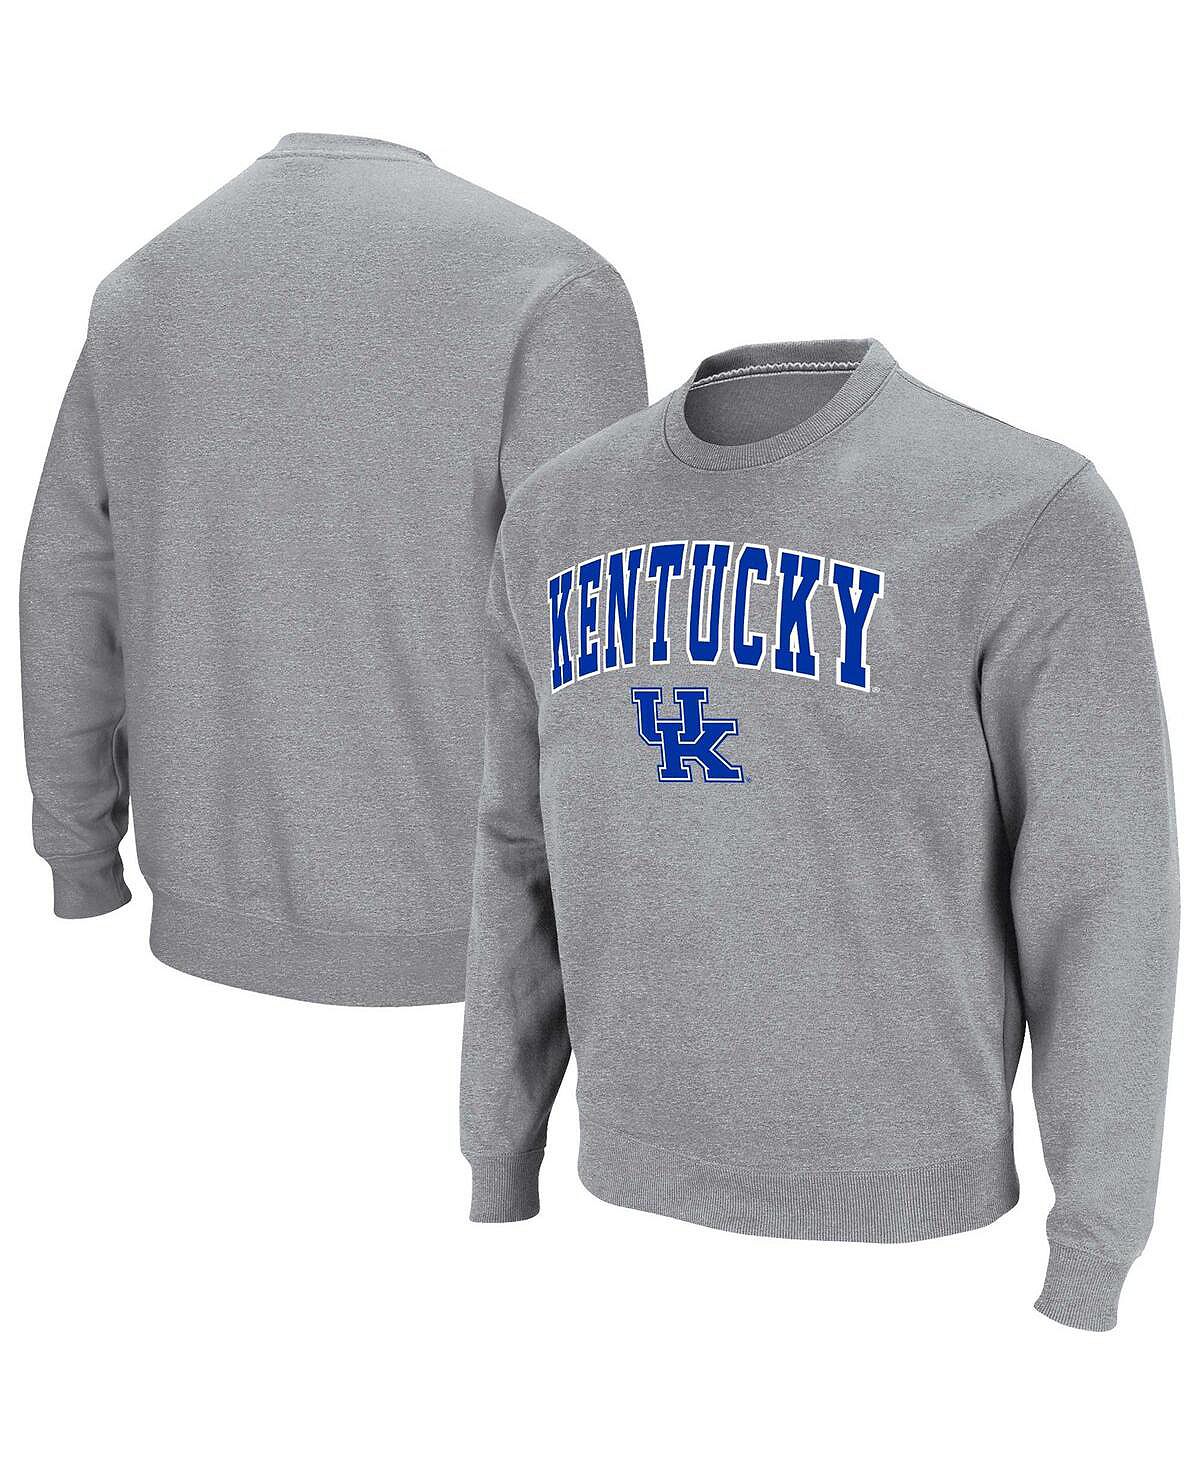 Мужской серый пуловер с логотипом и аркой Kentucky Wildcats Colosseum